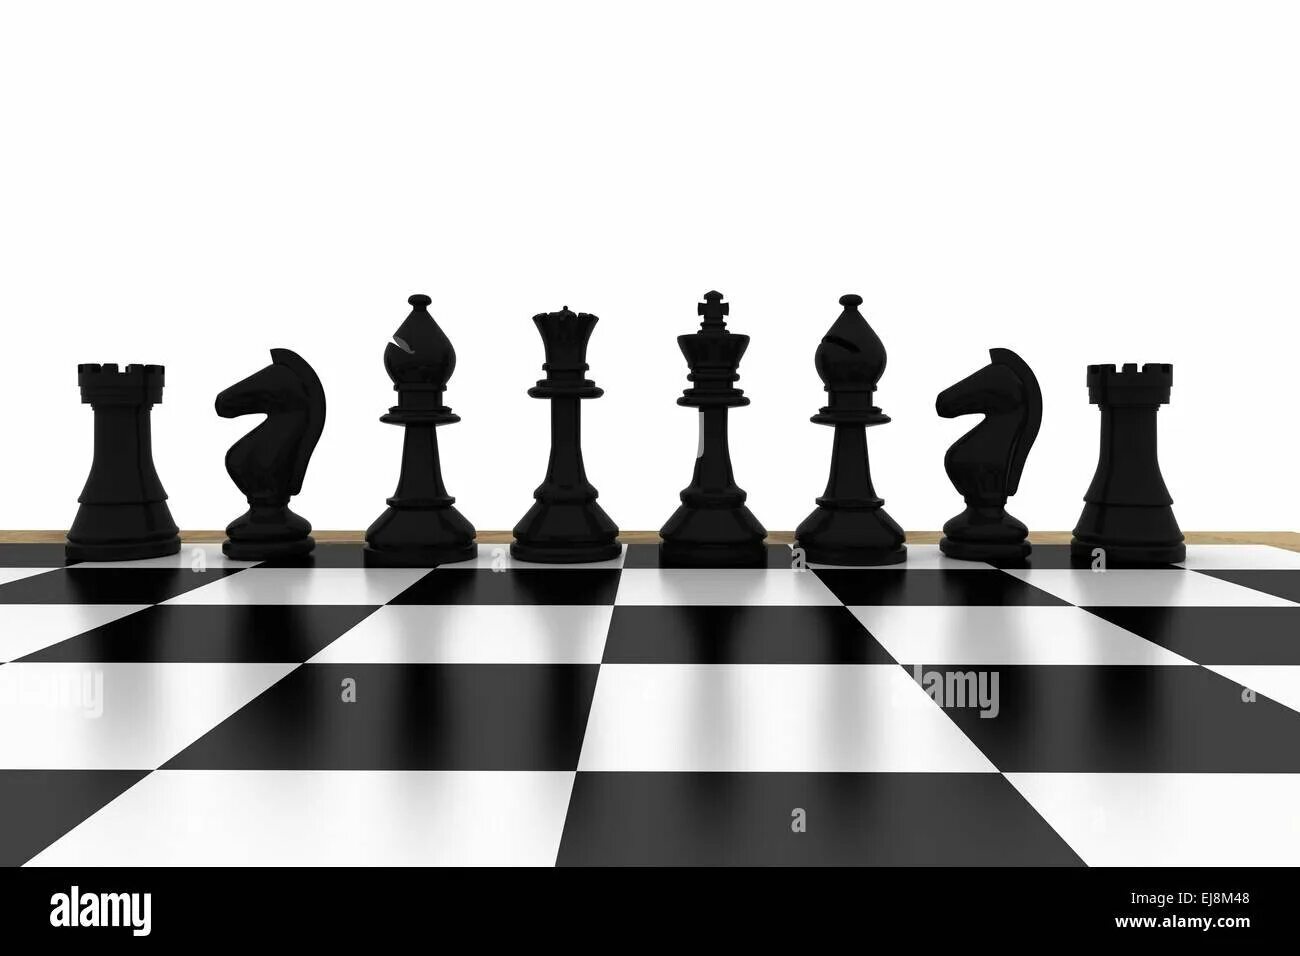 На шахматной доске 5 белых фигур. Шахматная доска с черными фигурами. Шахматная доска с фигурами рисунок. Фигуры шахматные белые на доске. Шахматные фигуры на черном фоне.